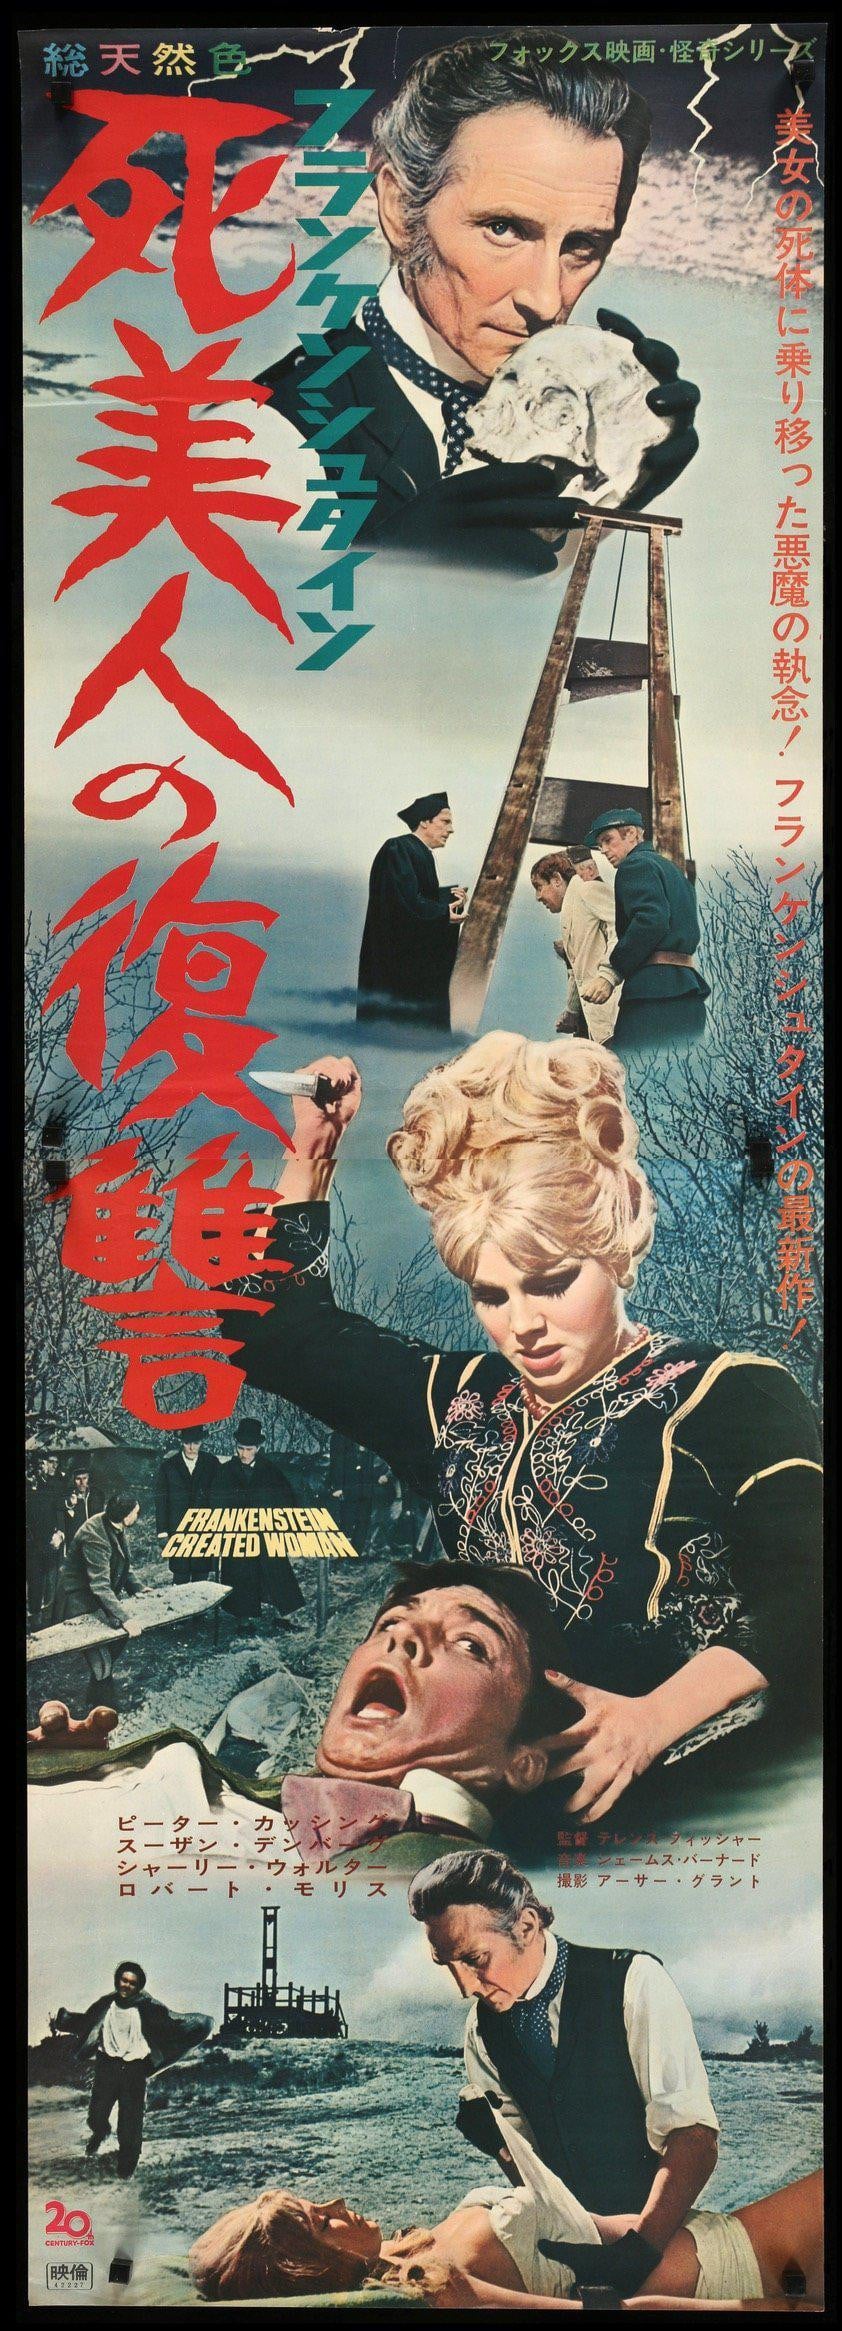 Frankenstein Created Woman (1967) original movie poster for sale at Original Film Art